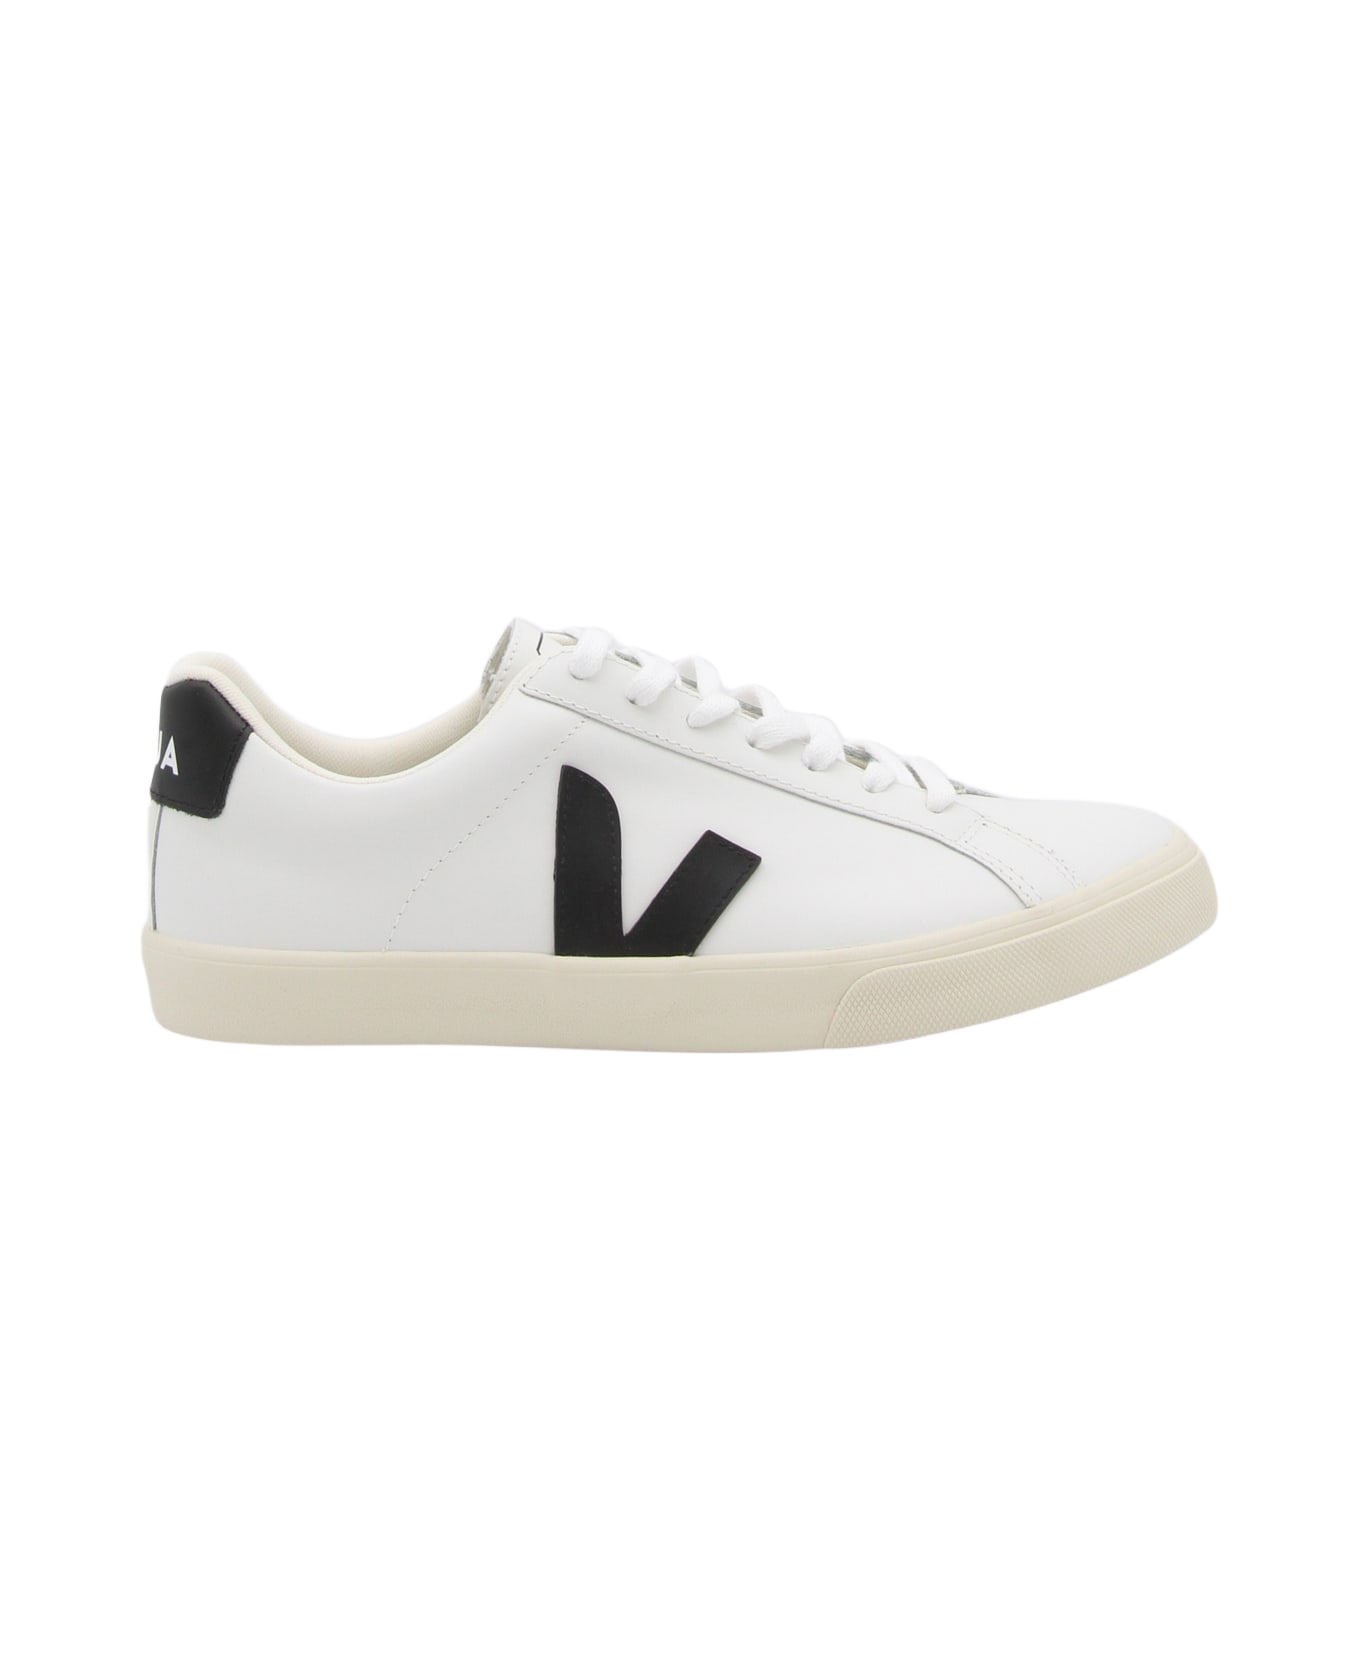 Veja White And Black Faux Leather Esplar Sneakers - EXTRA-WHITE_BLACK